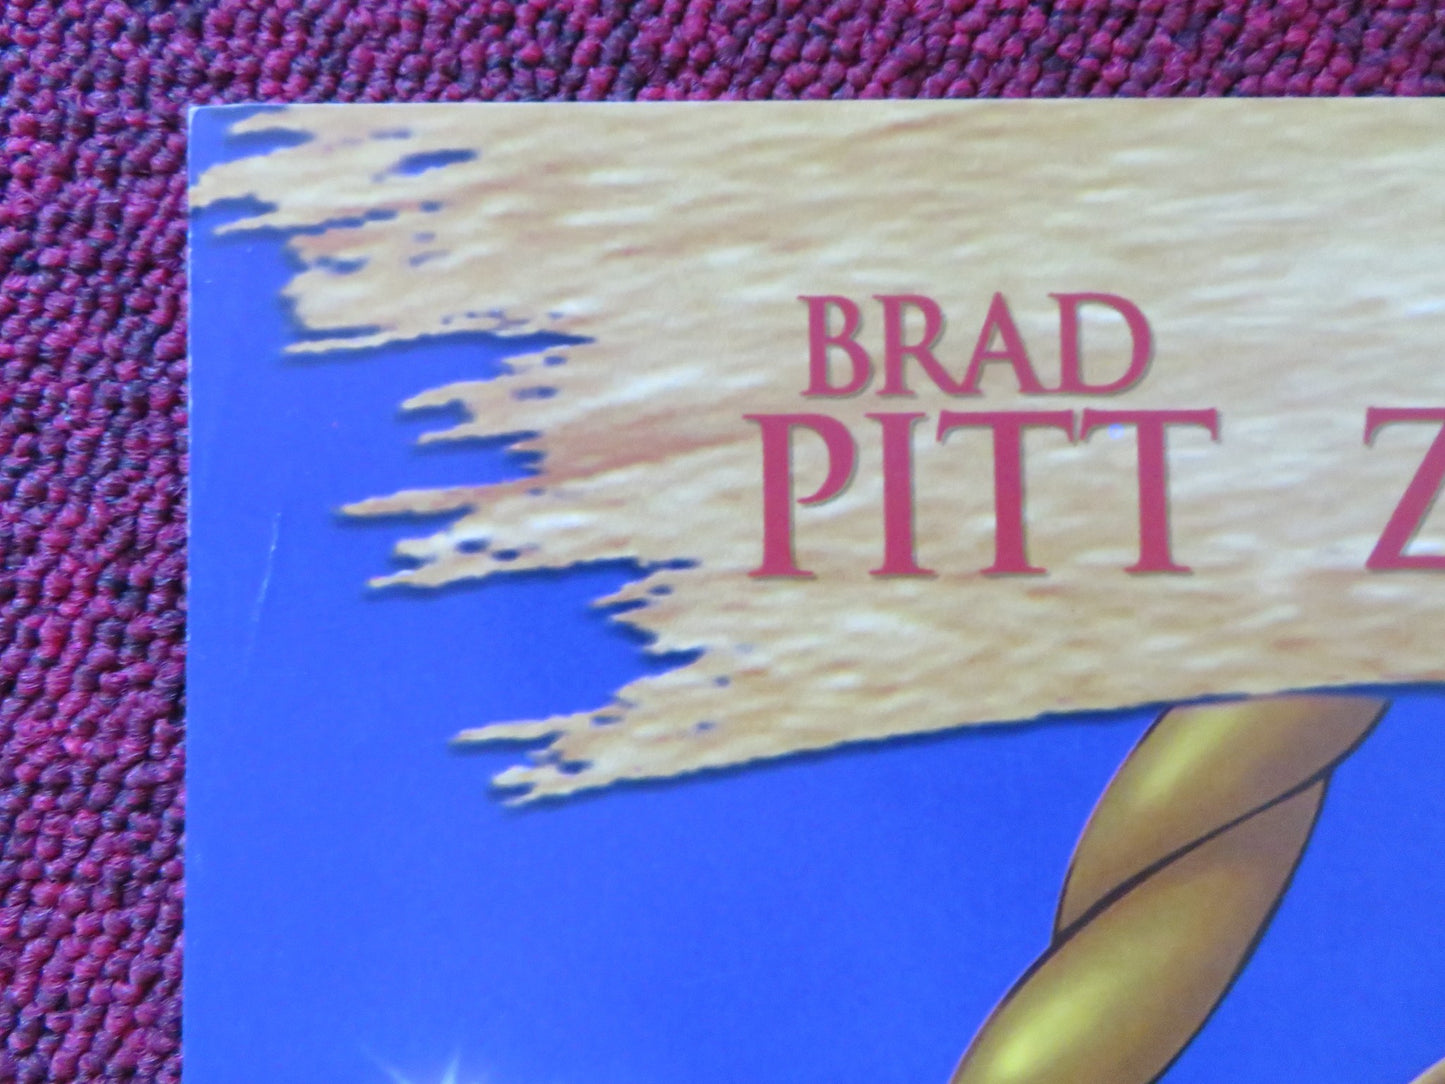 SINBAD: LEGEND OF THE SEVEN SEAS DVD & VHS VIDEO POSTER BRAD PITT 2003